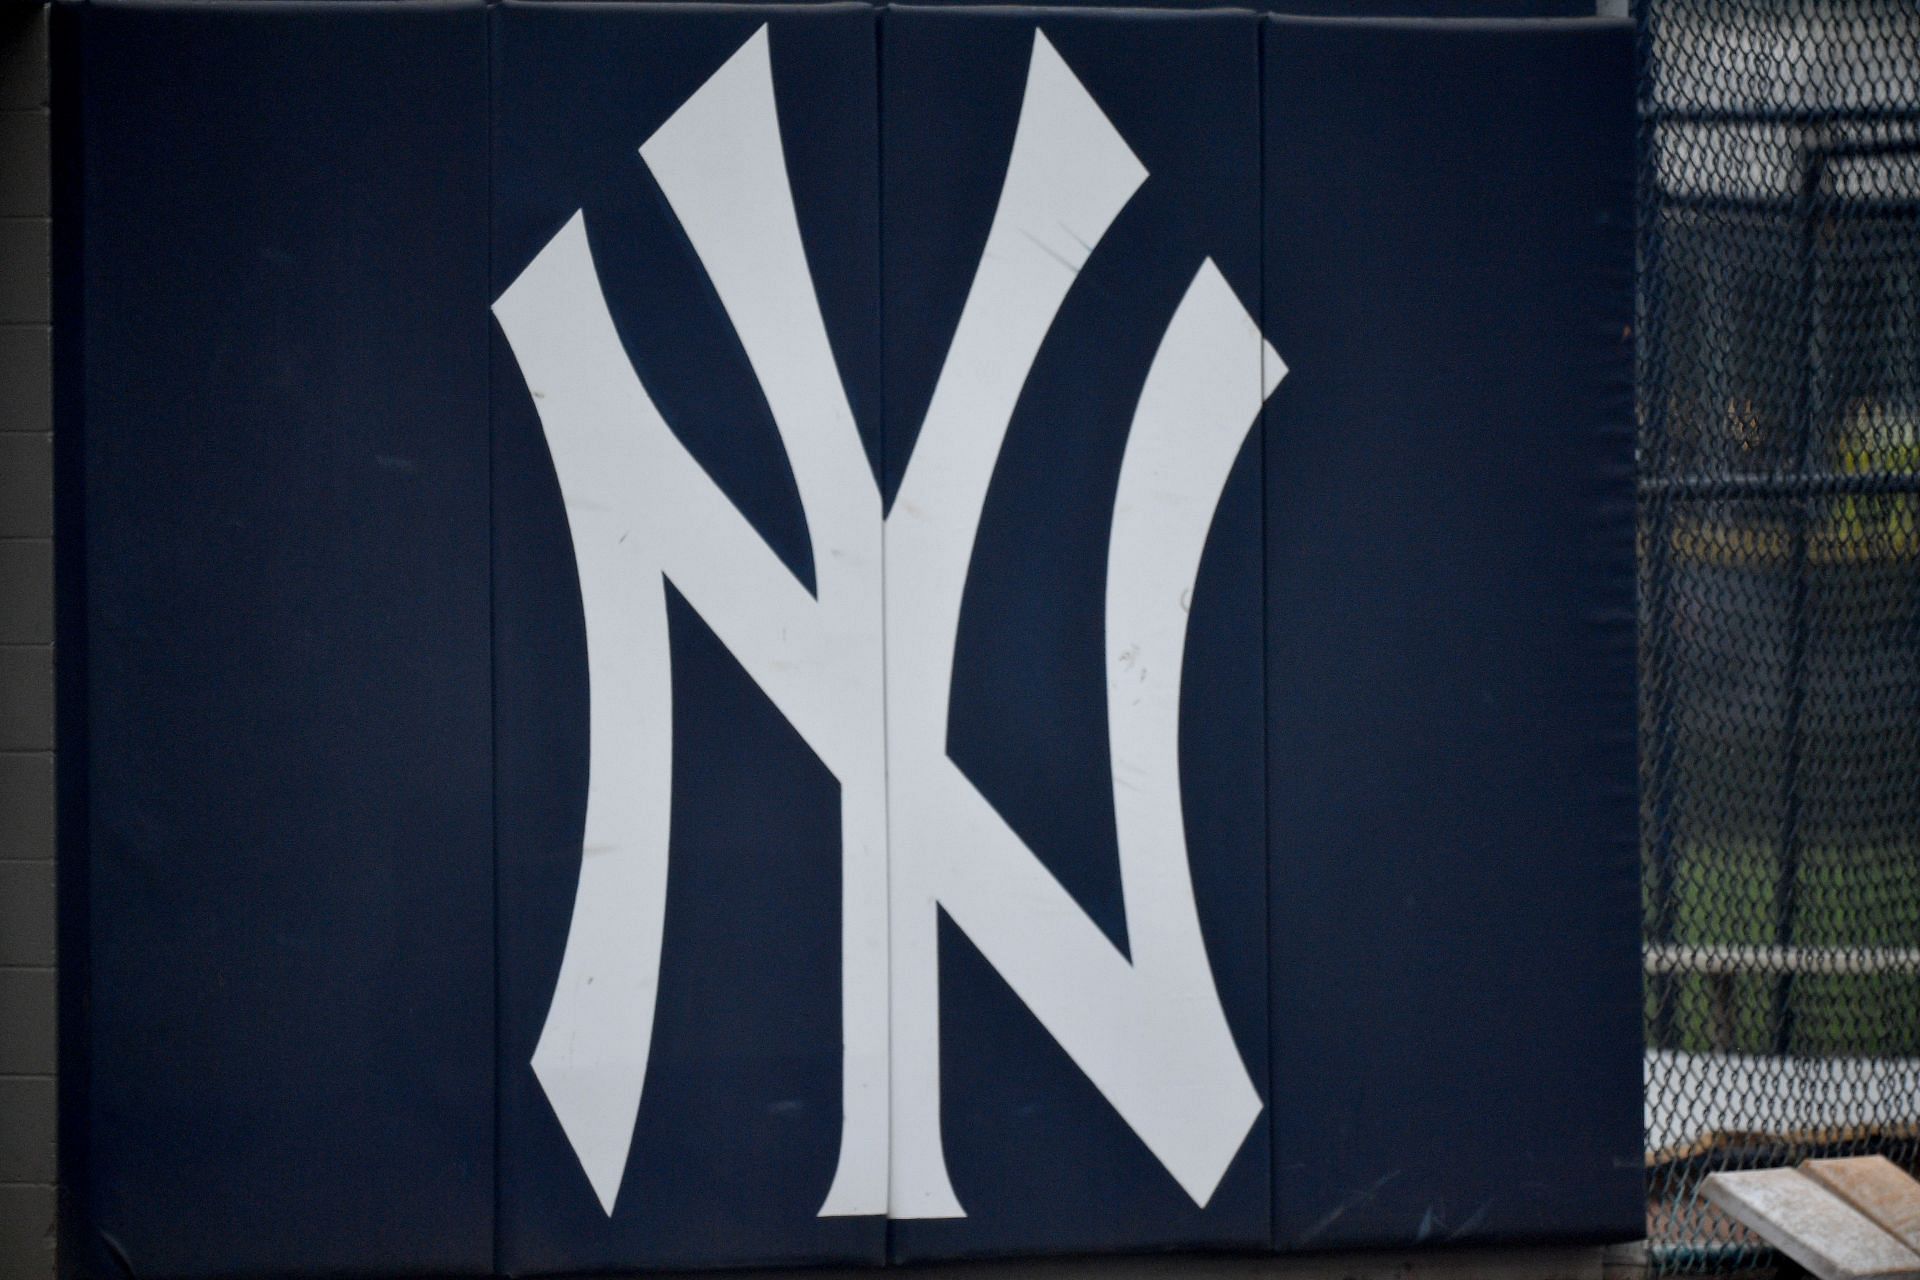 New York Yankees Spring Training